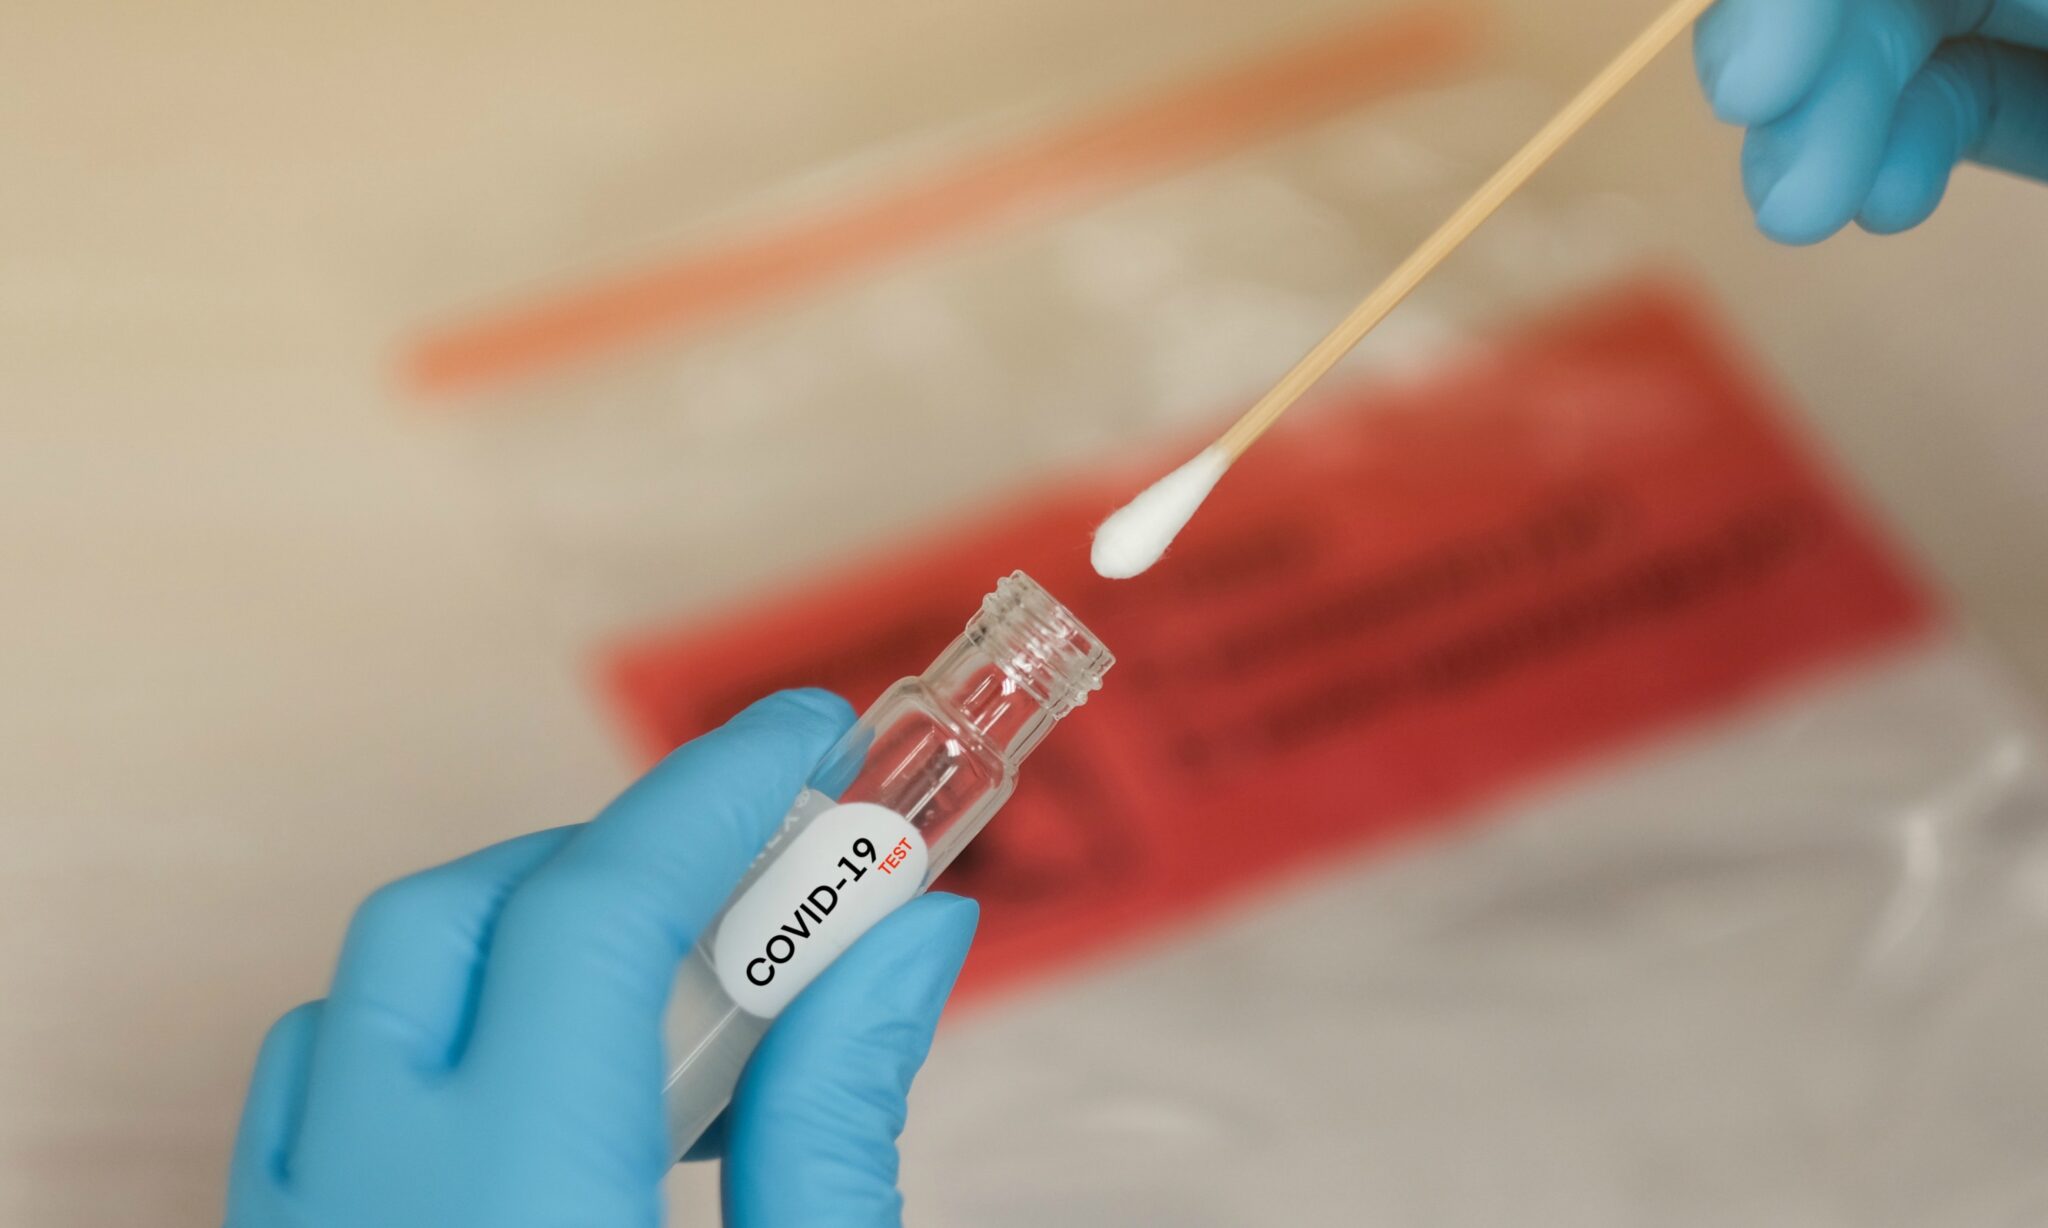 Roche lança kits para detectar coronavírus